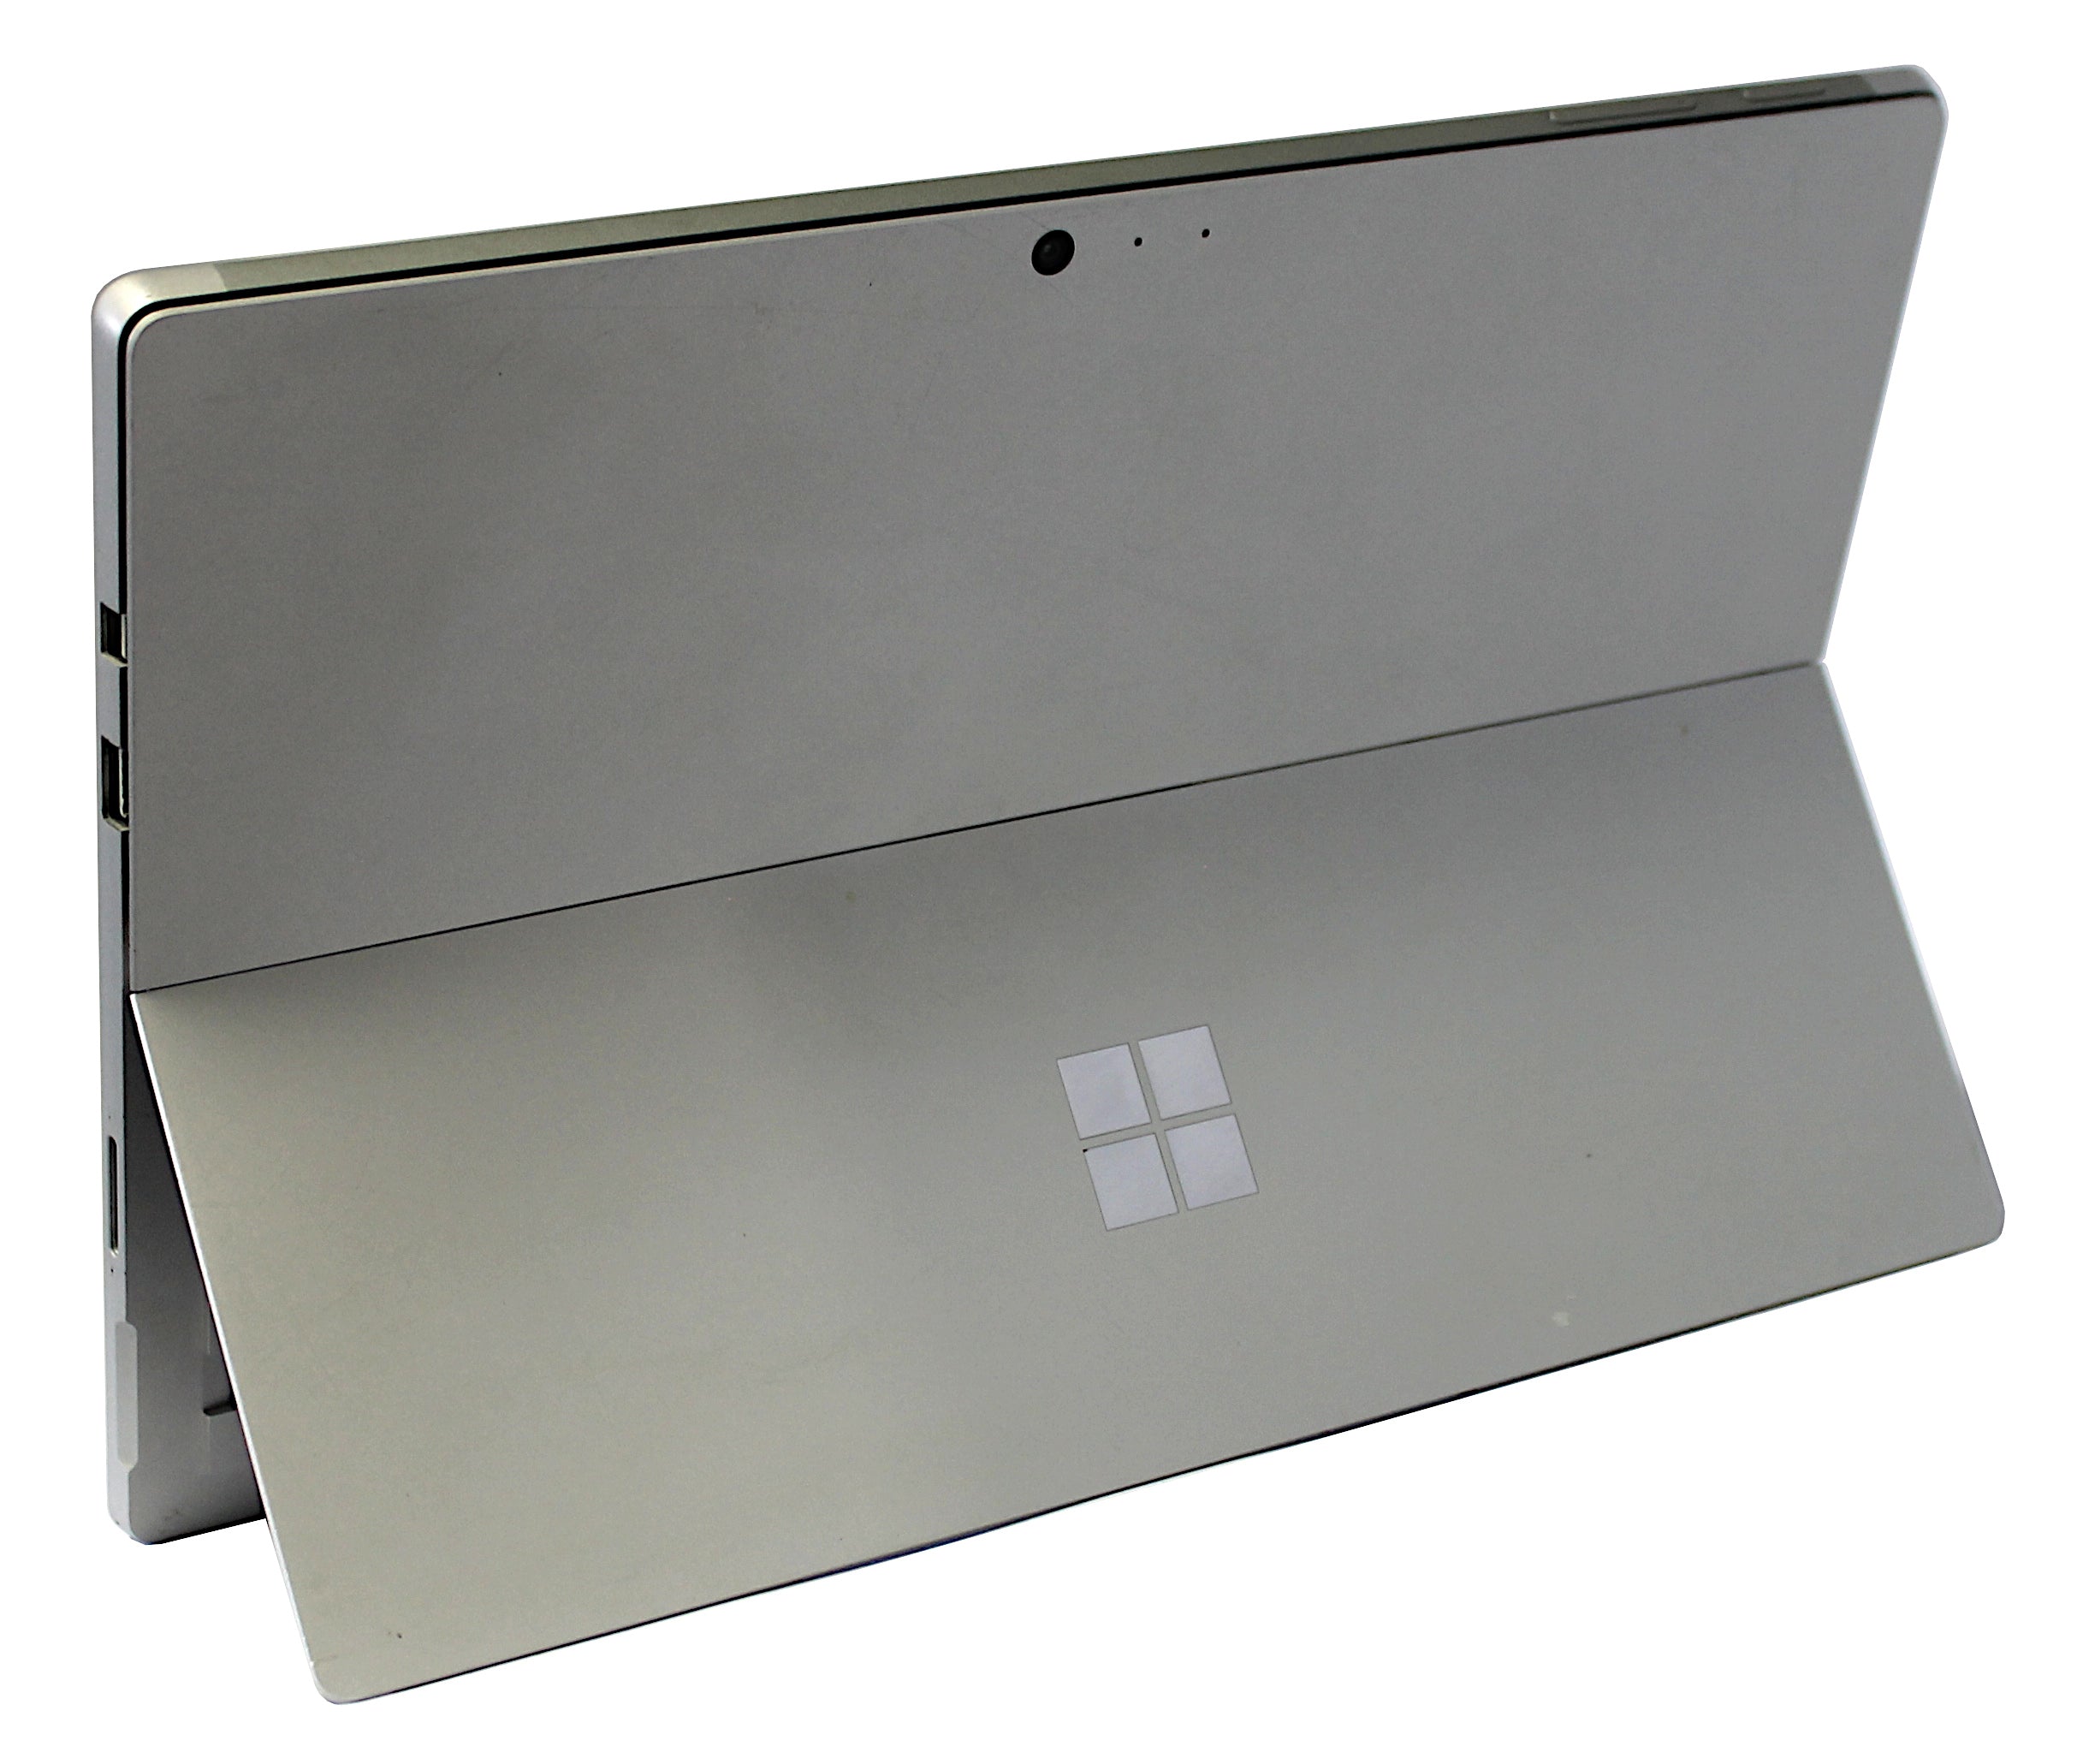 Microsoft Surface Pro 5 Tablet, Core i5, 4GB RAM, 128GB eMMC, Windows 10